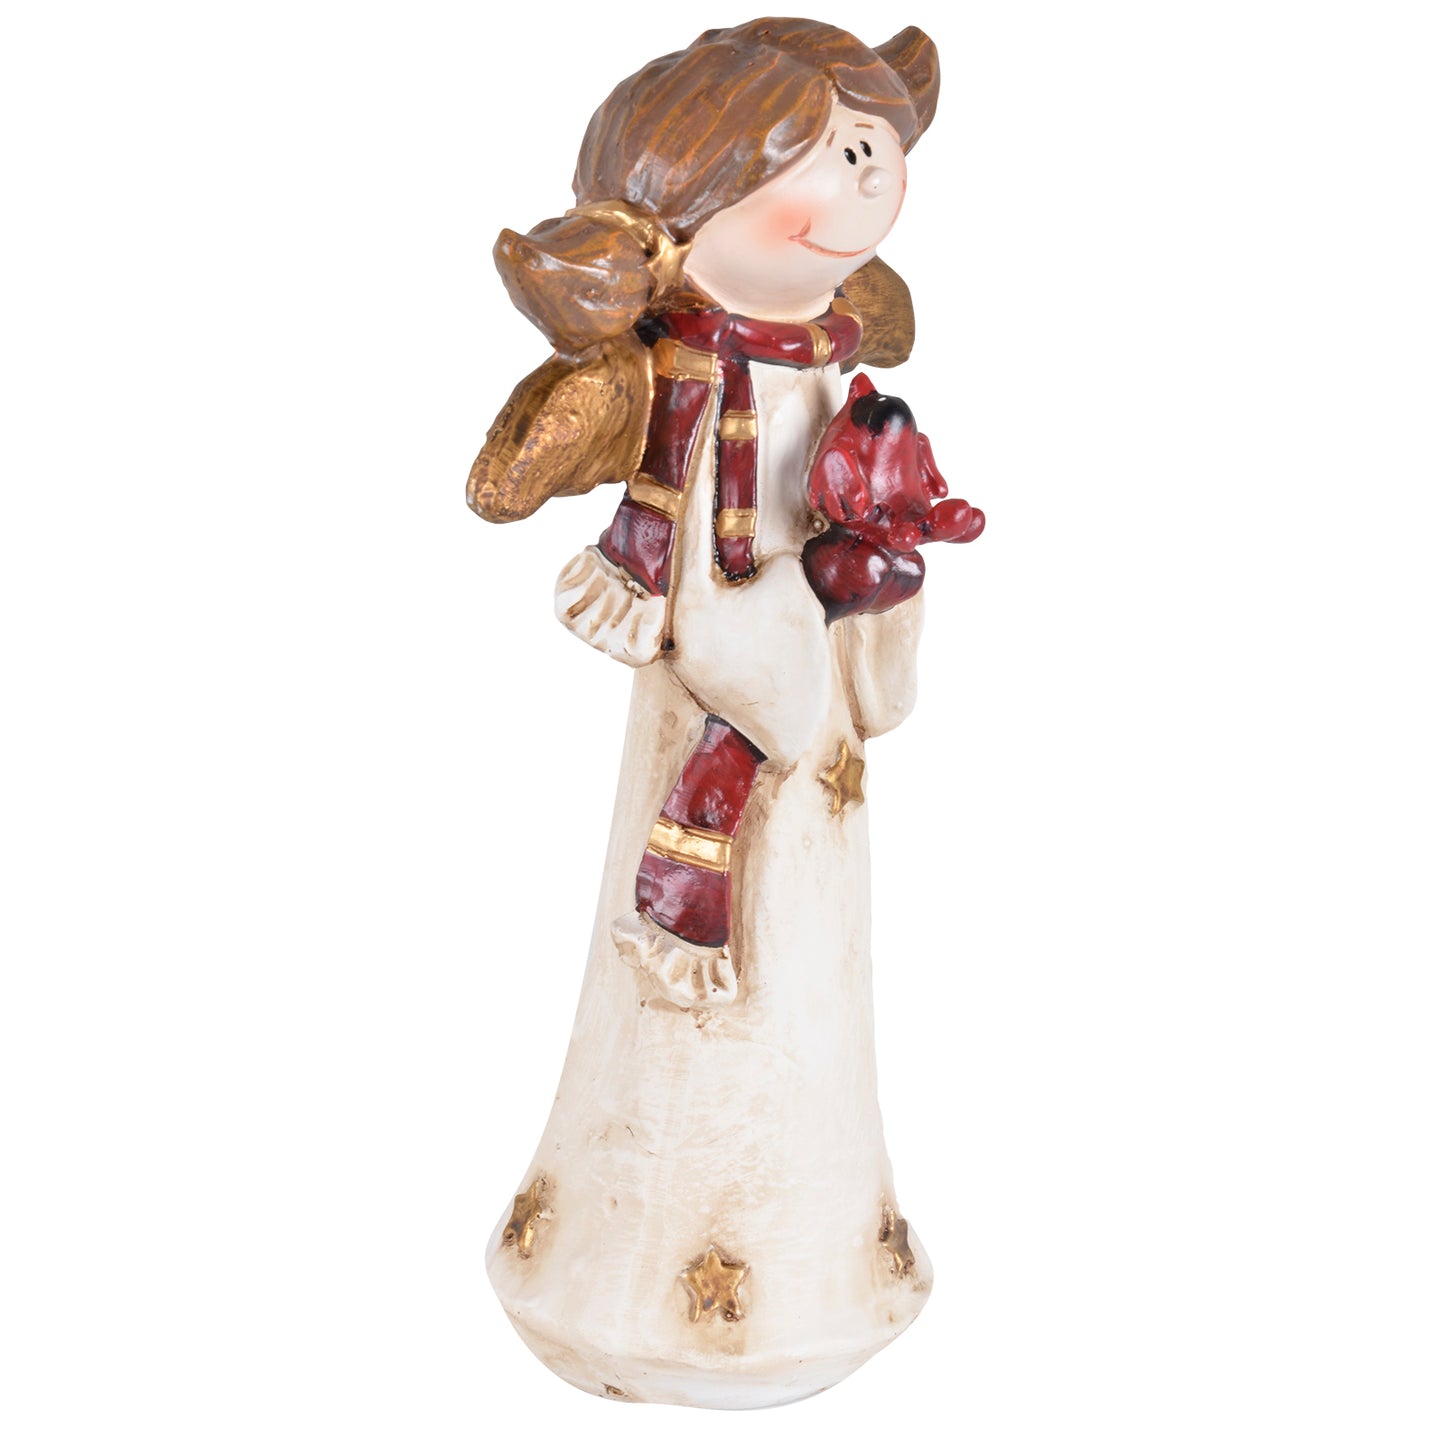 Mr Crimbo Angel Ornament Resin Christmas Decoration - MrCrimbo.co.uk -XS4311 - 21cm -angel figurine